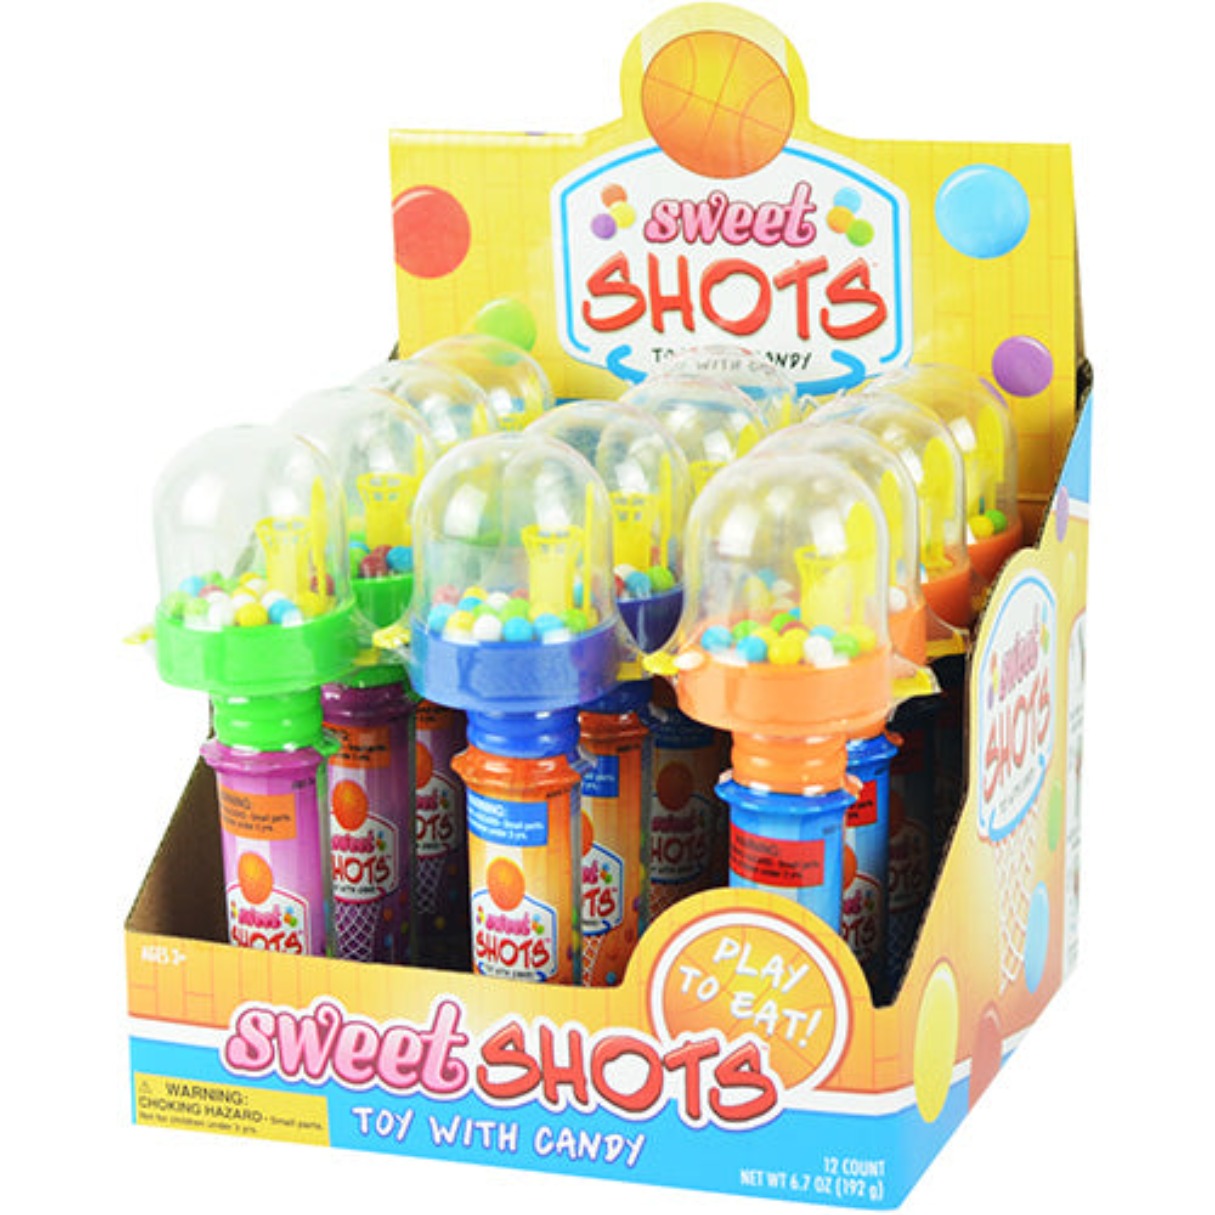 Koko's Sweet Shots Basketball Toy with Candy .56oz - 96ct